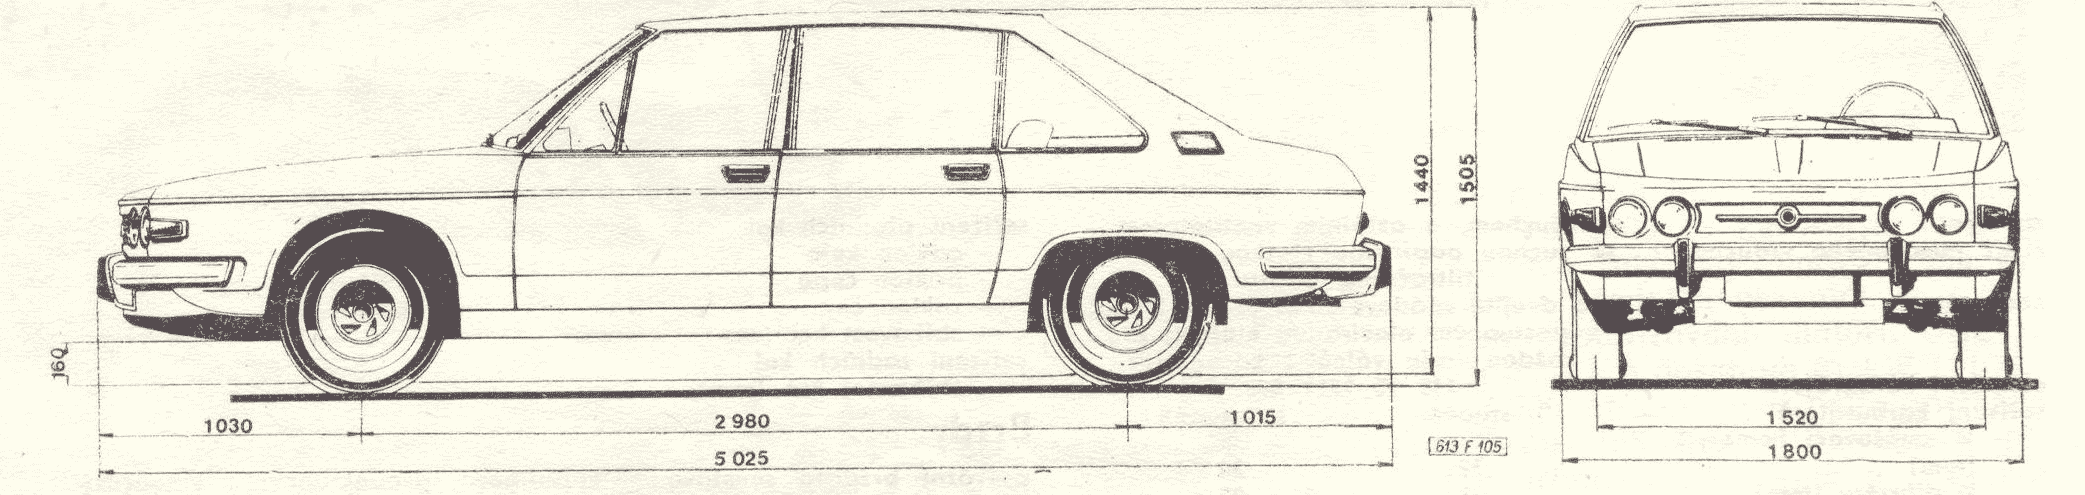 Tatra 613 blueprint